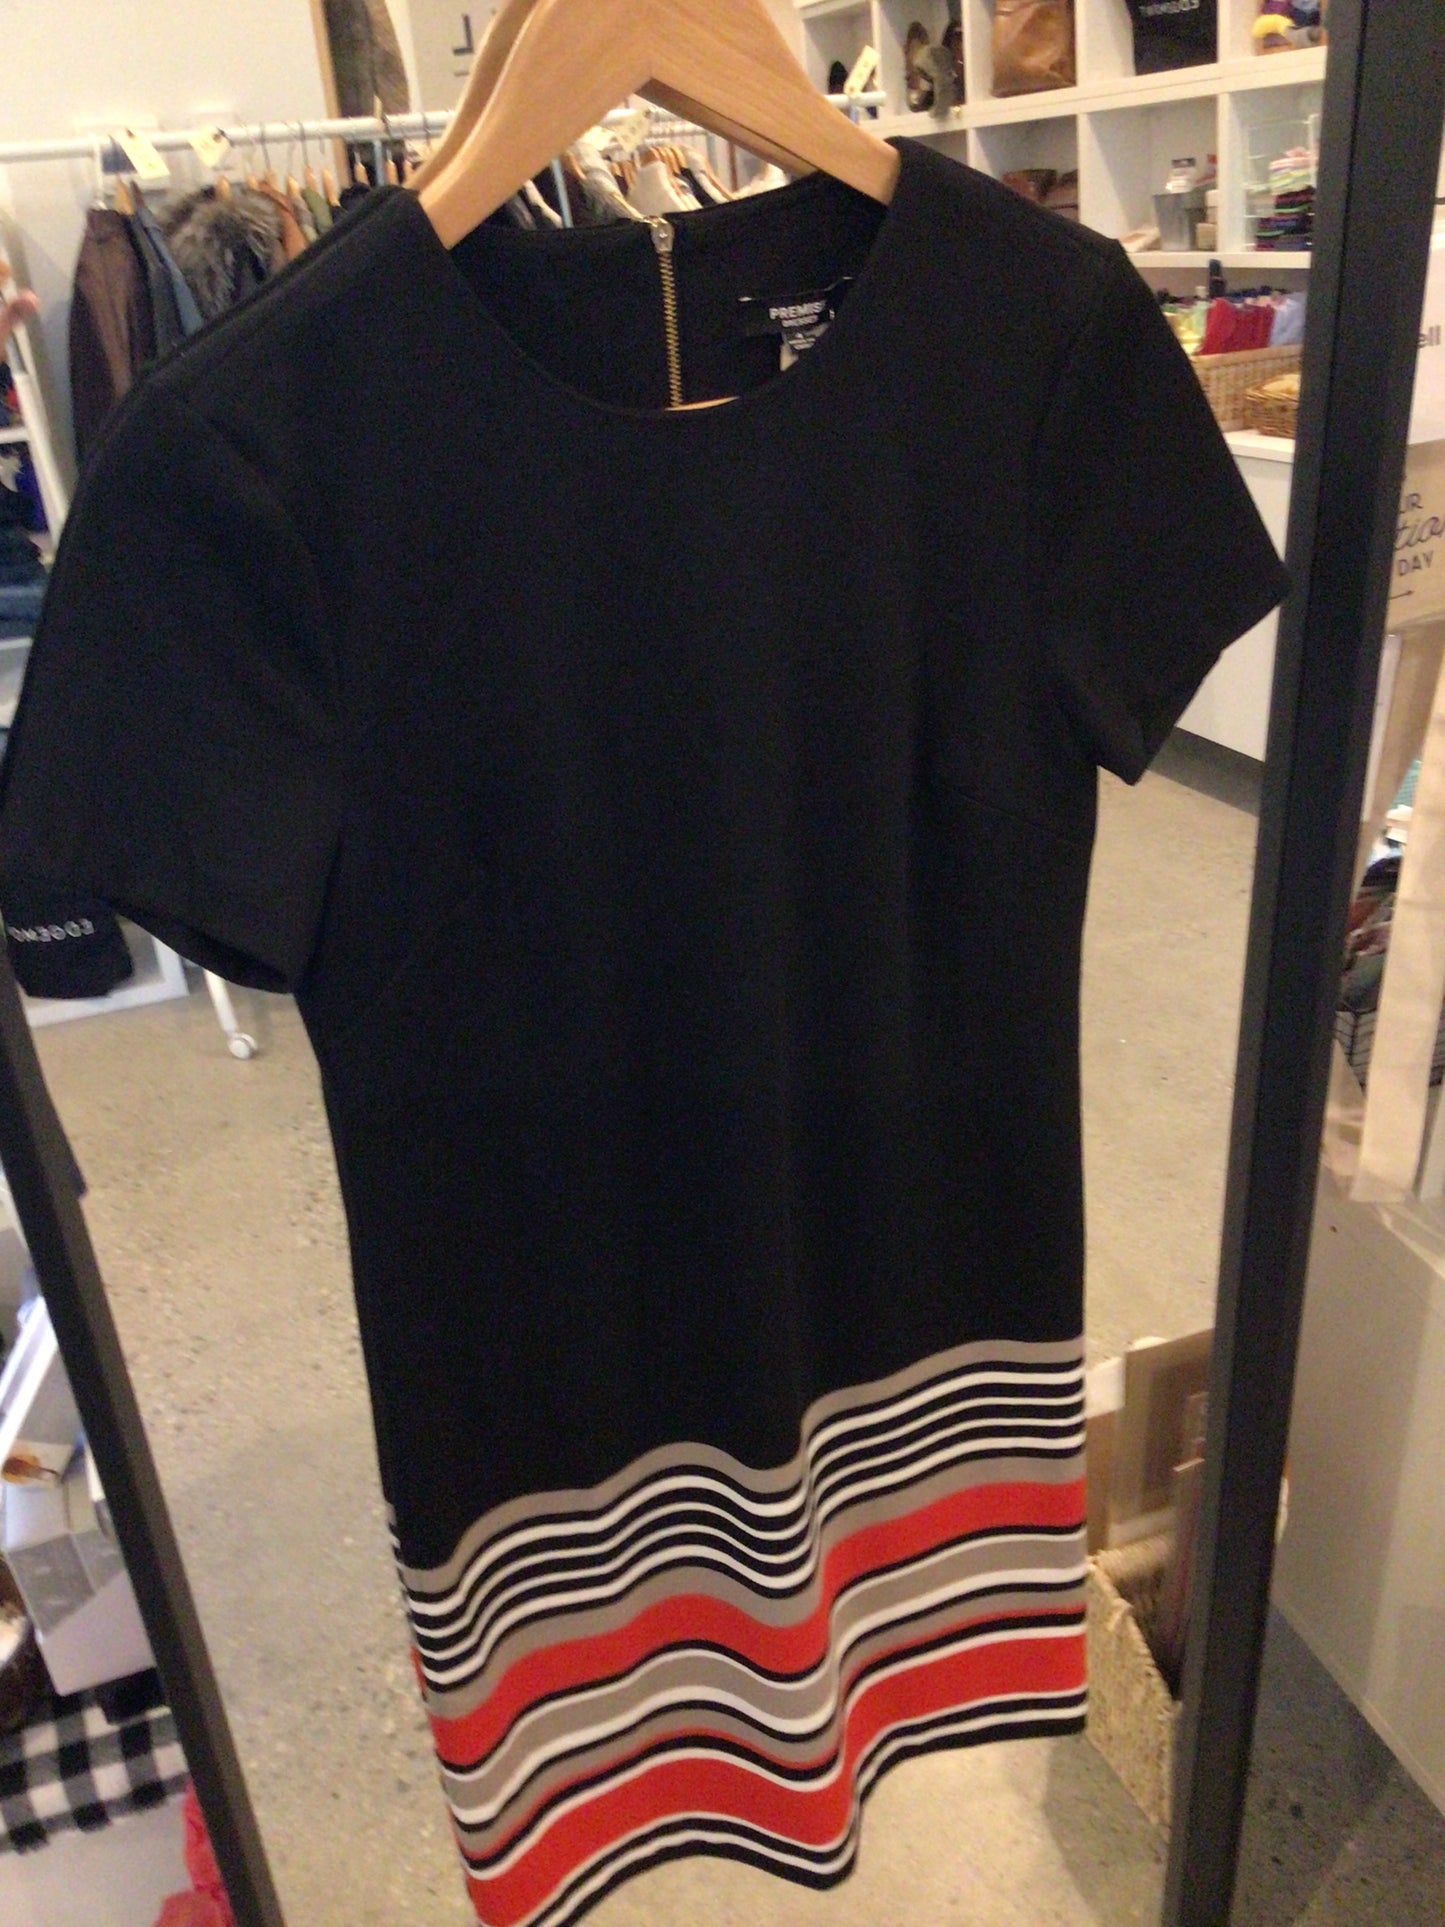 Consignment 0725-21 Premise black dress w/stripes. Size 4